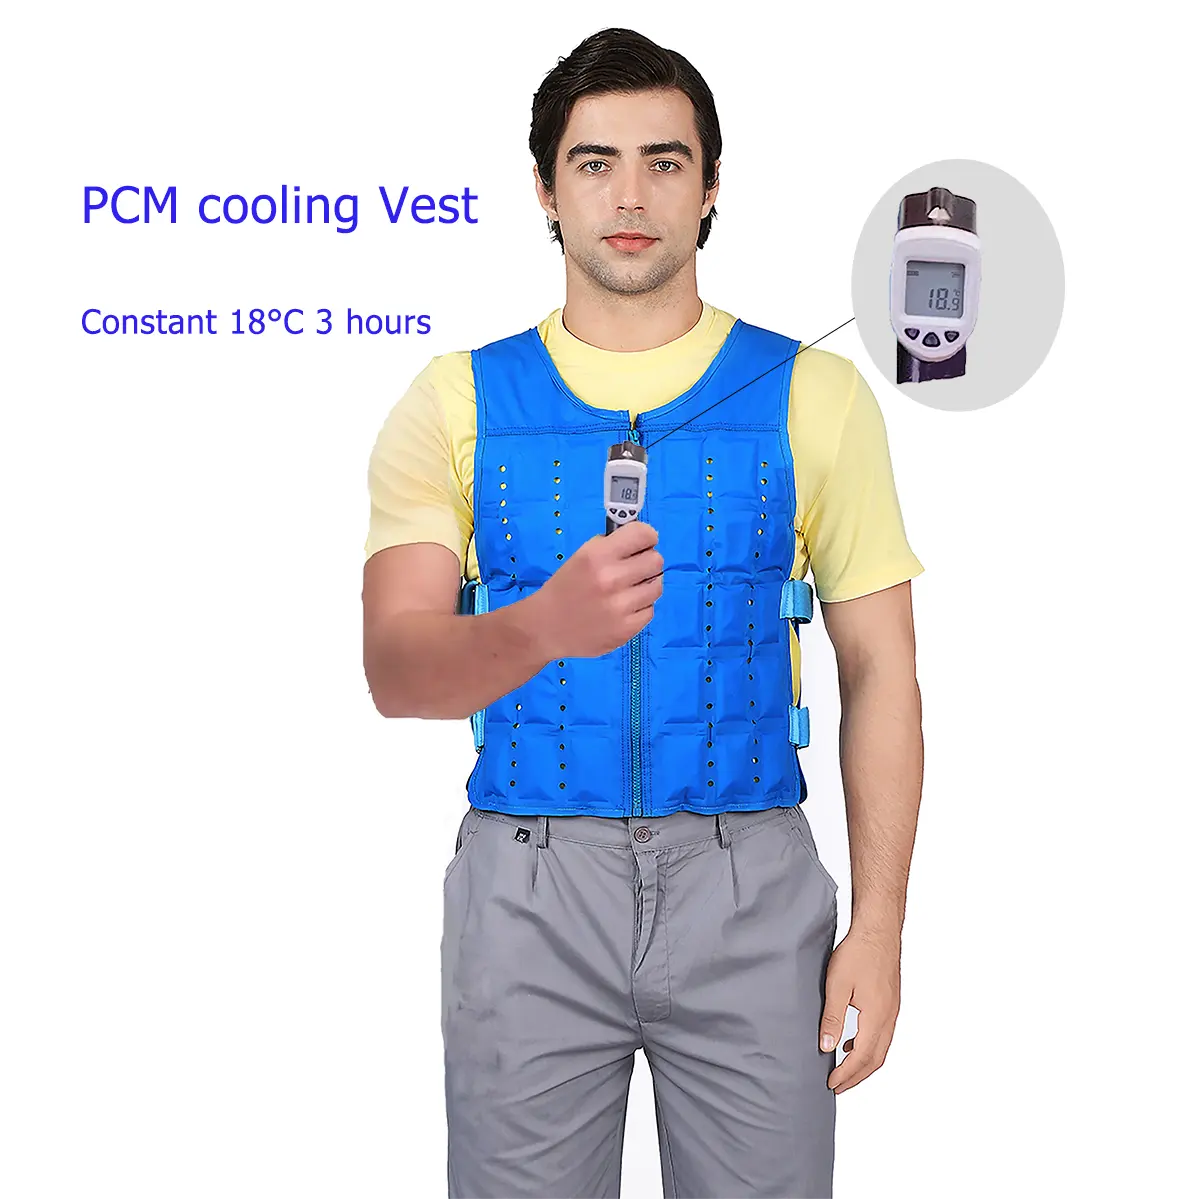 Cooling Vest Clothes New Patent 22 Celsius Temperature Controllable PCM Cooling Clothes For Ms Summer Cooling Vest For Men Women Kids